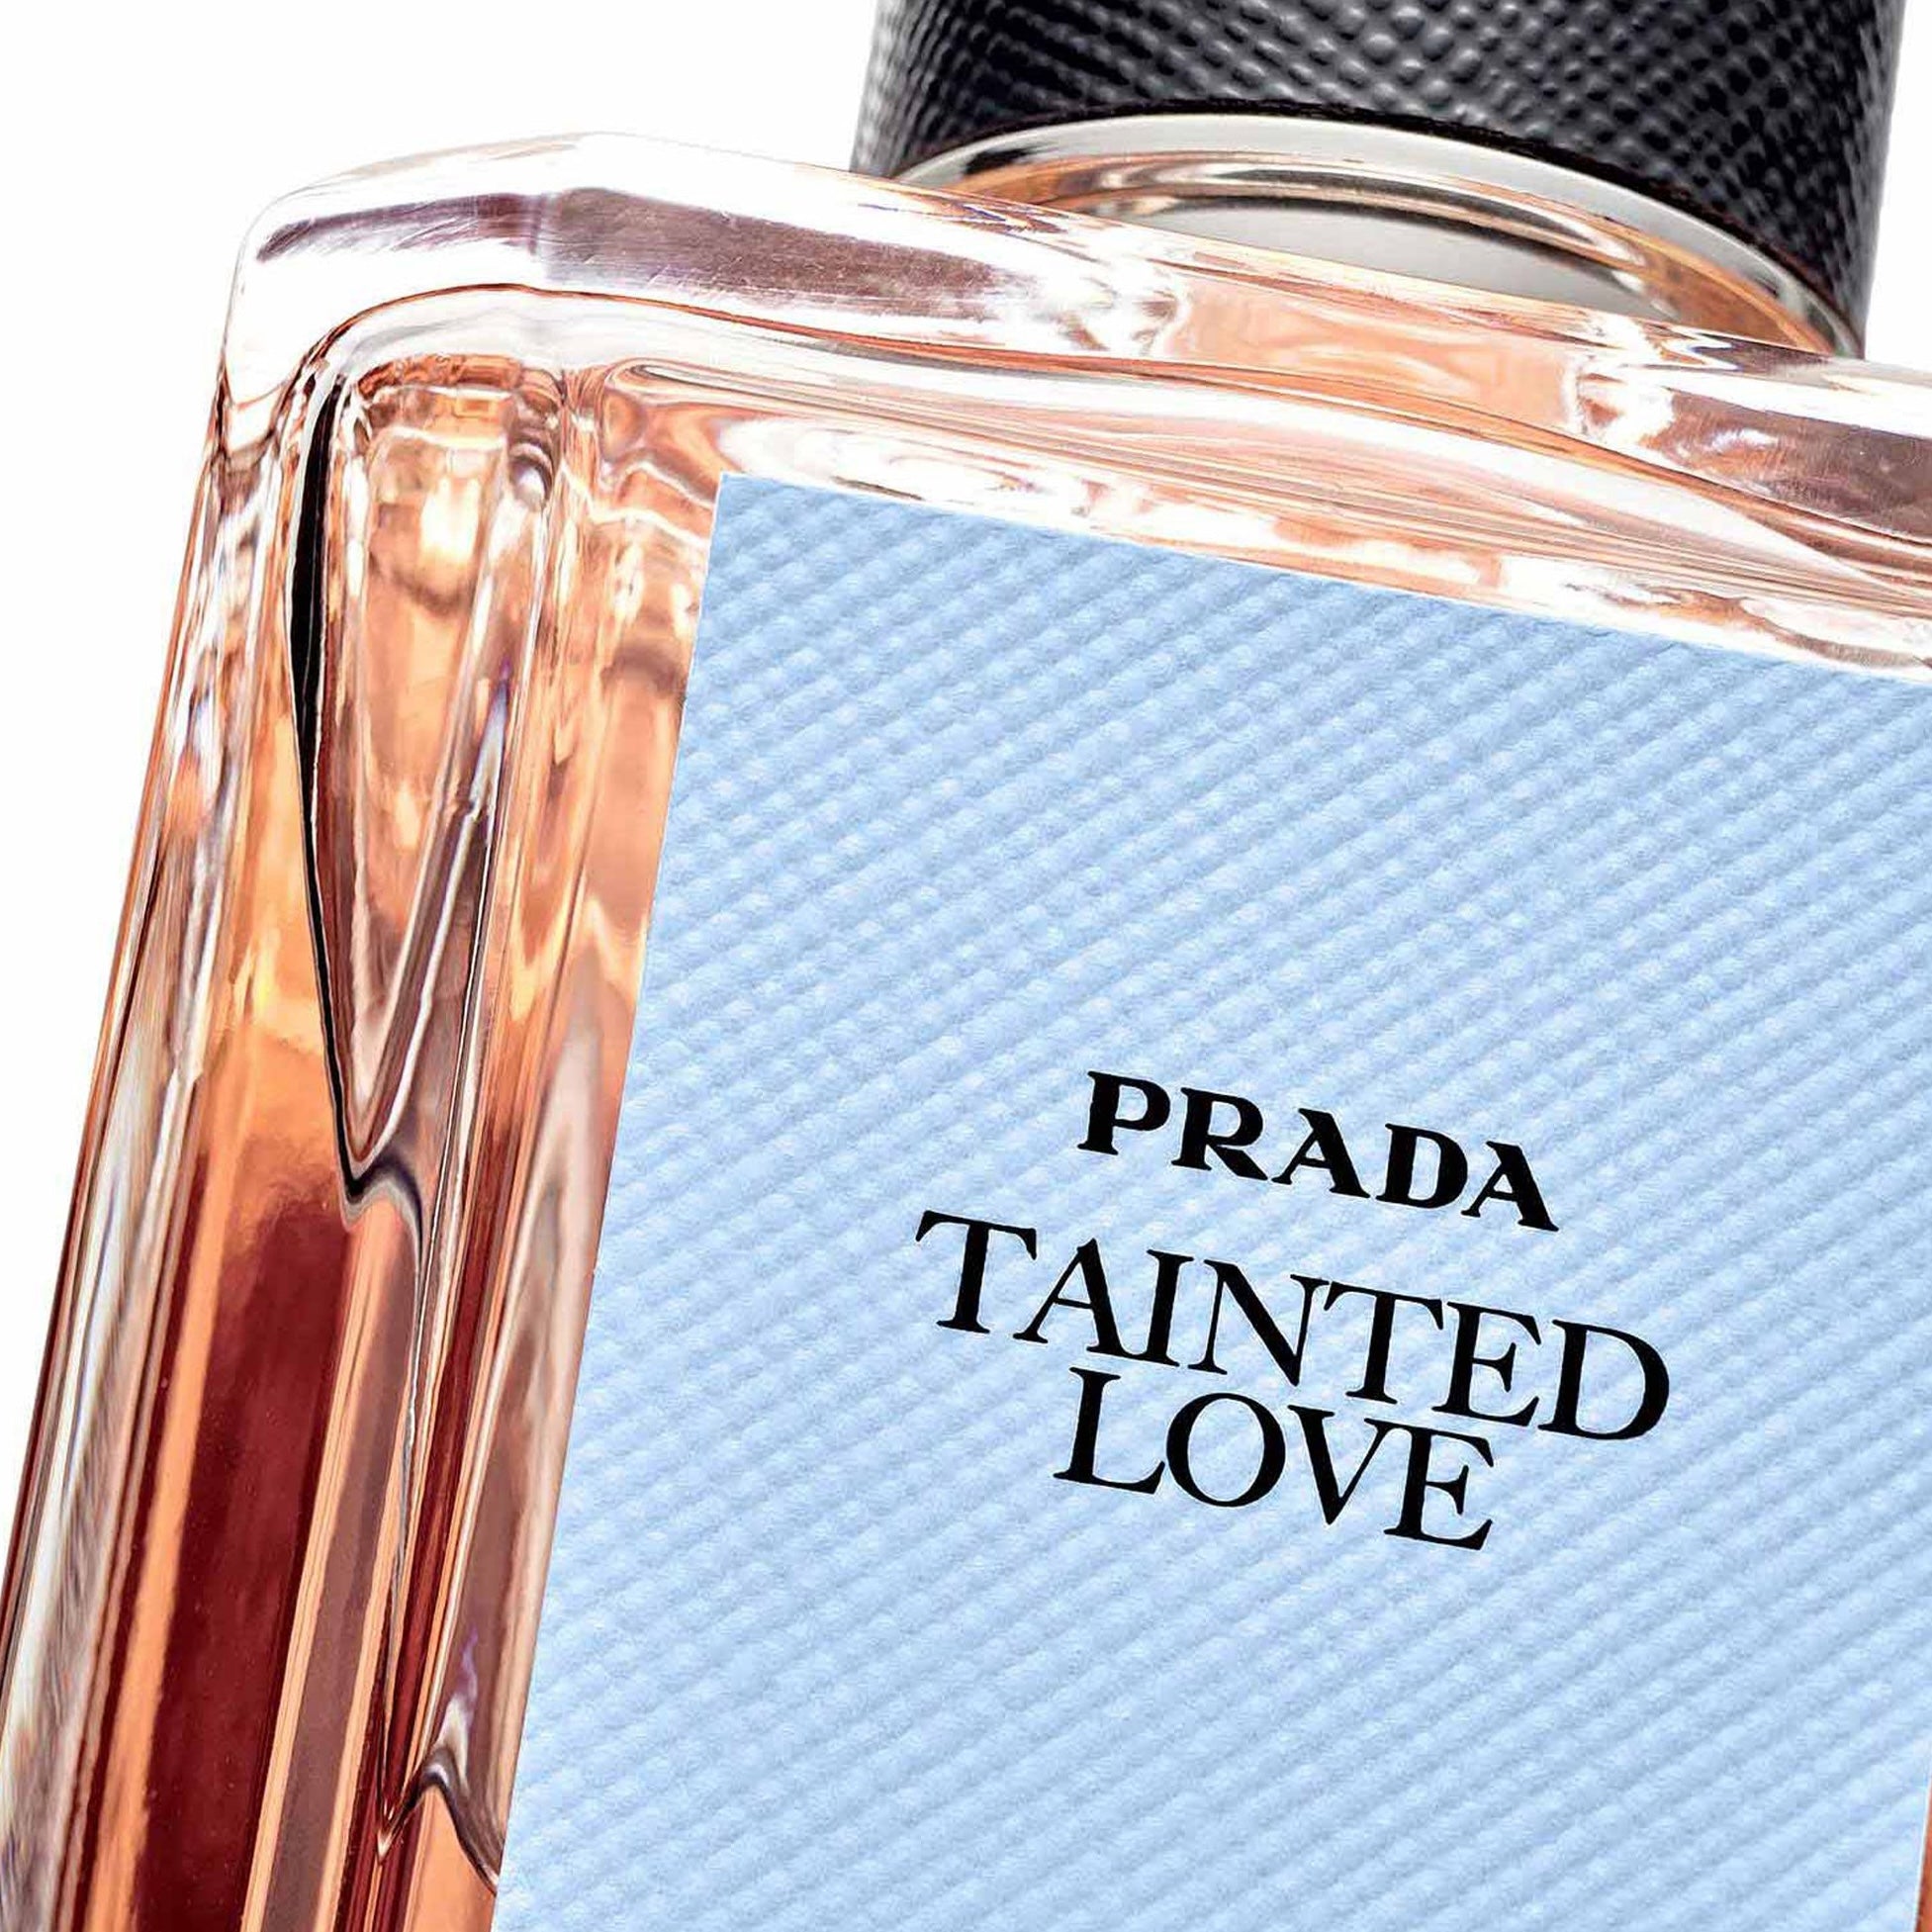 Prada Olfactories Tainted Love EDP | My Perfume Shop Australia